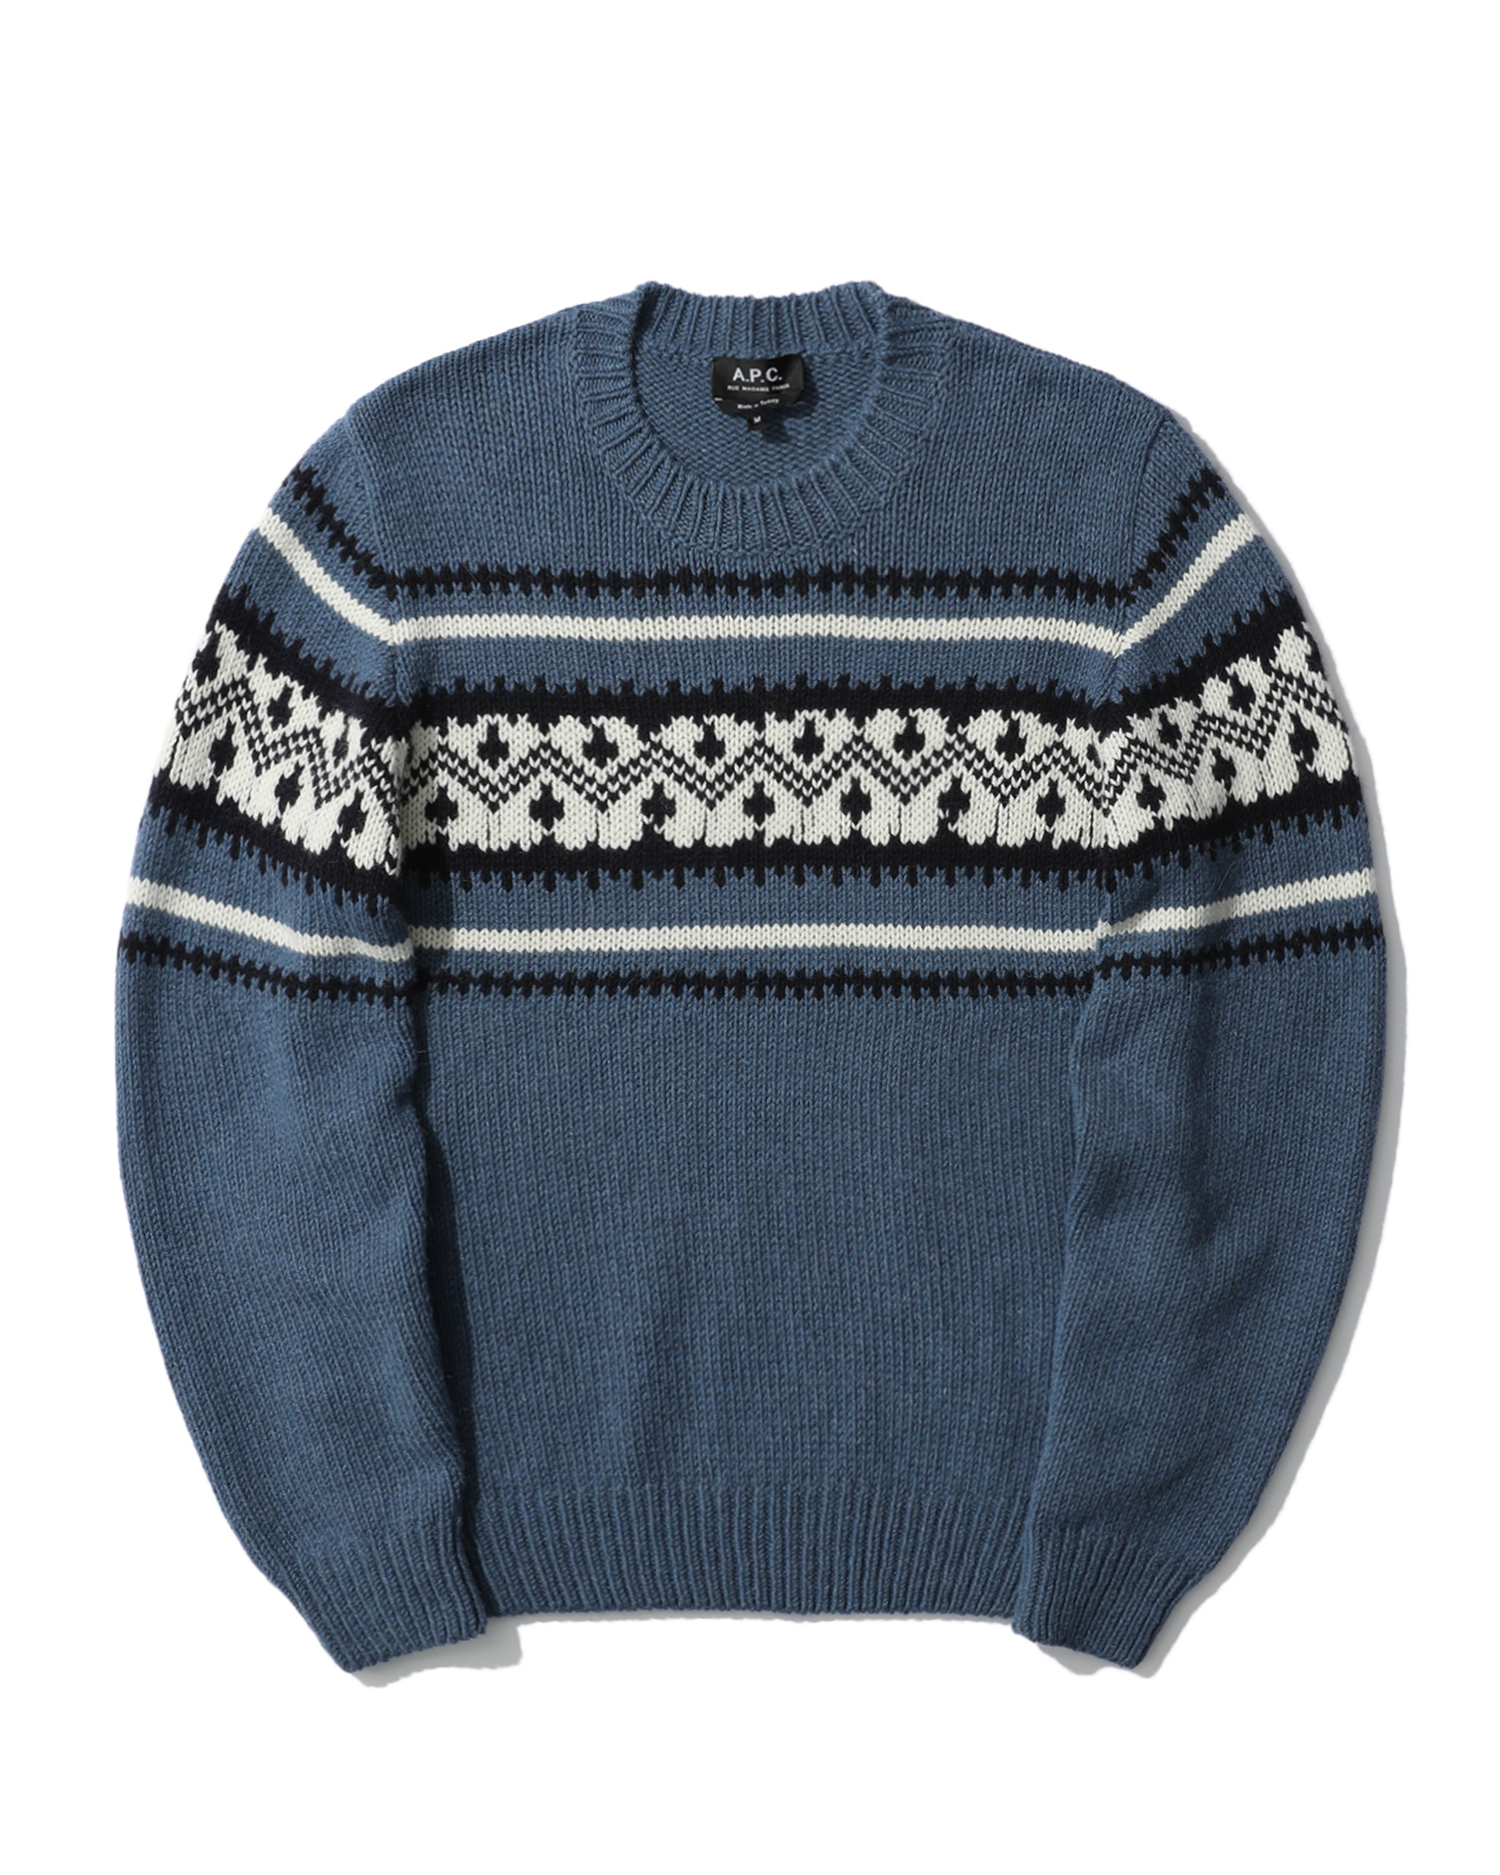 Franz sweater